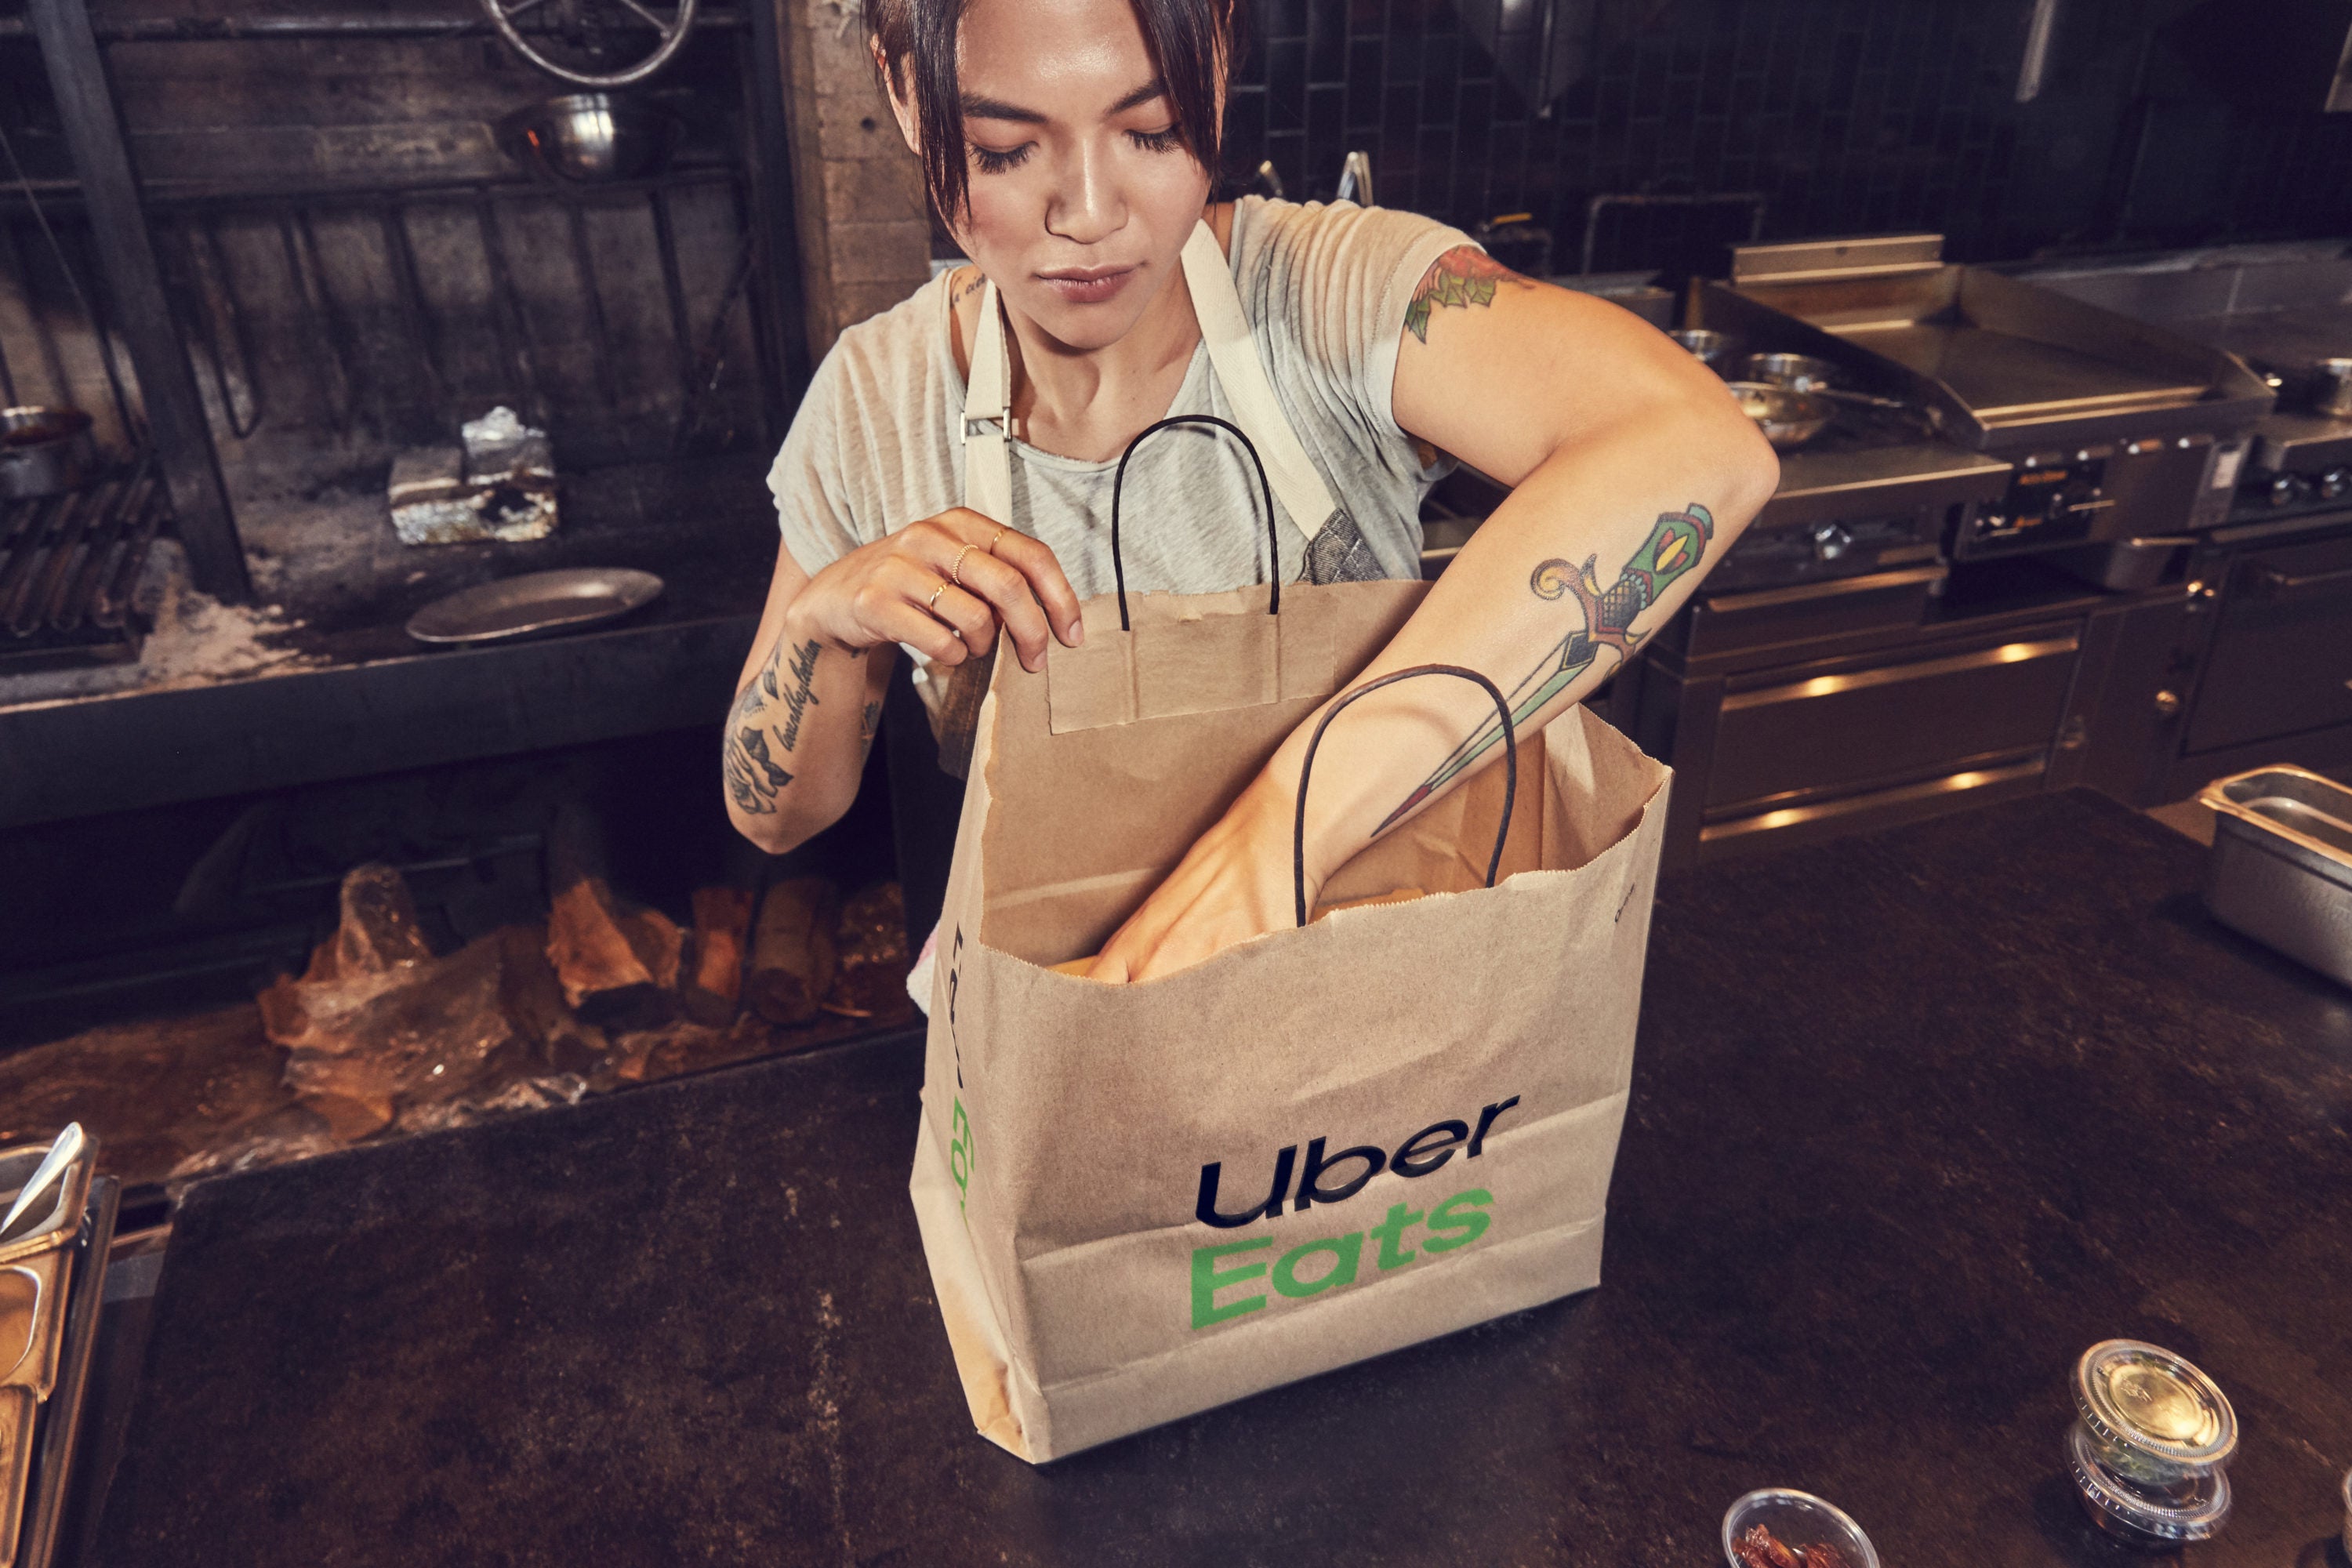 Uber Eats restaurant packing food